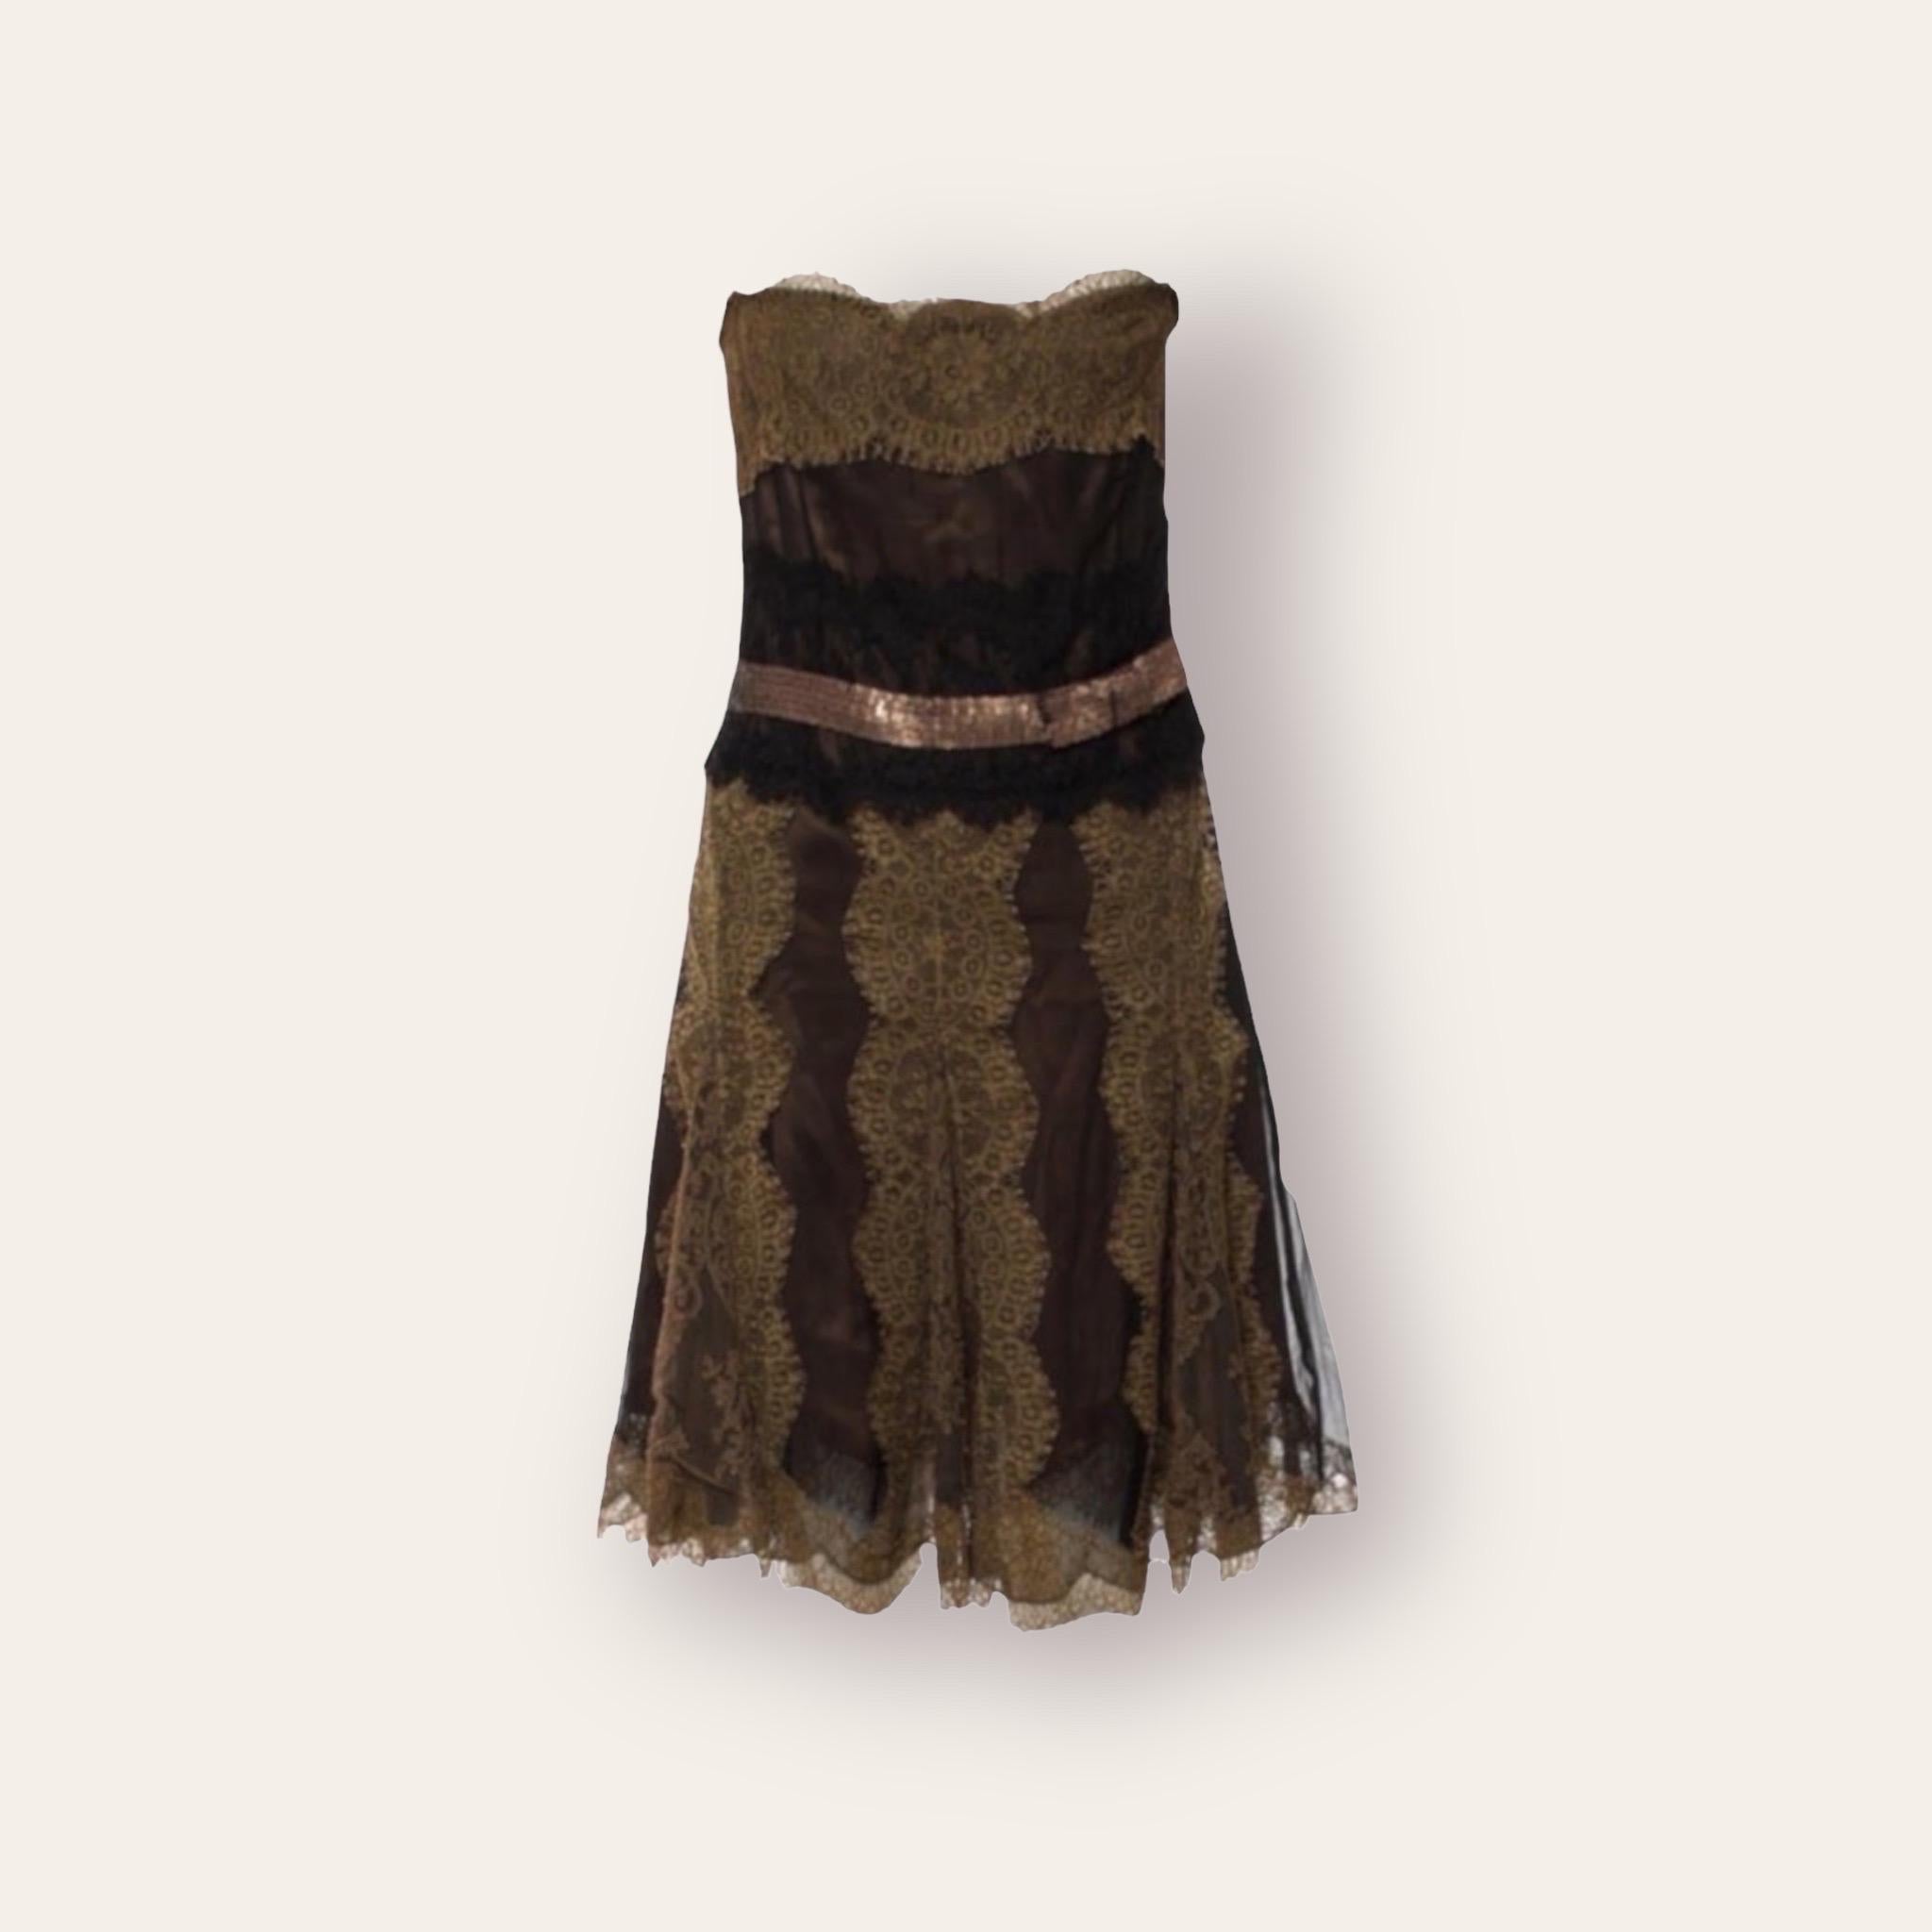 Stunning Dolce & Gabbana Lace & Silk Evening Dress Sequin Bowtie Detail 42 For Sale 1